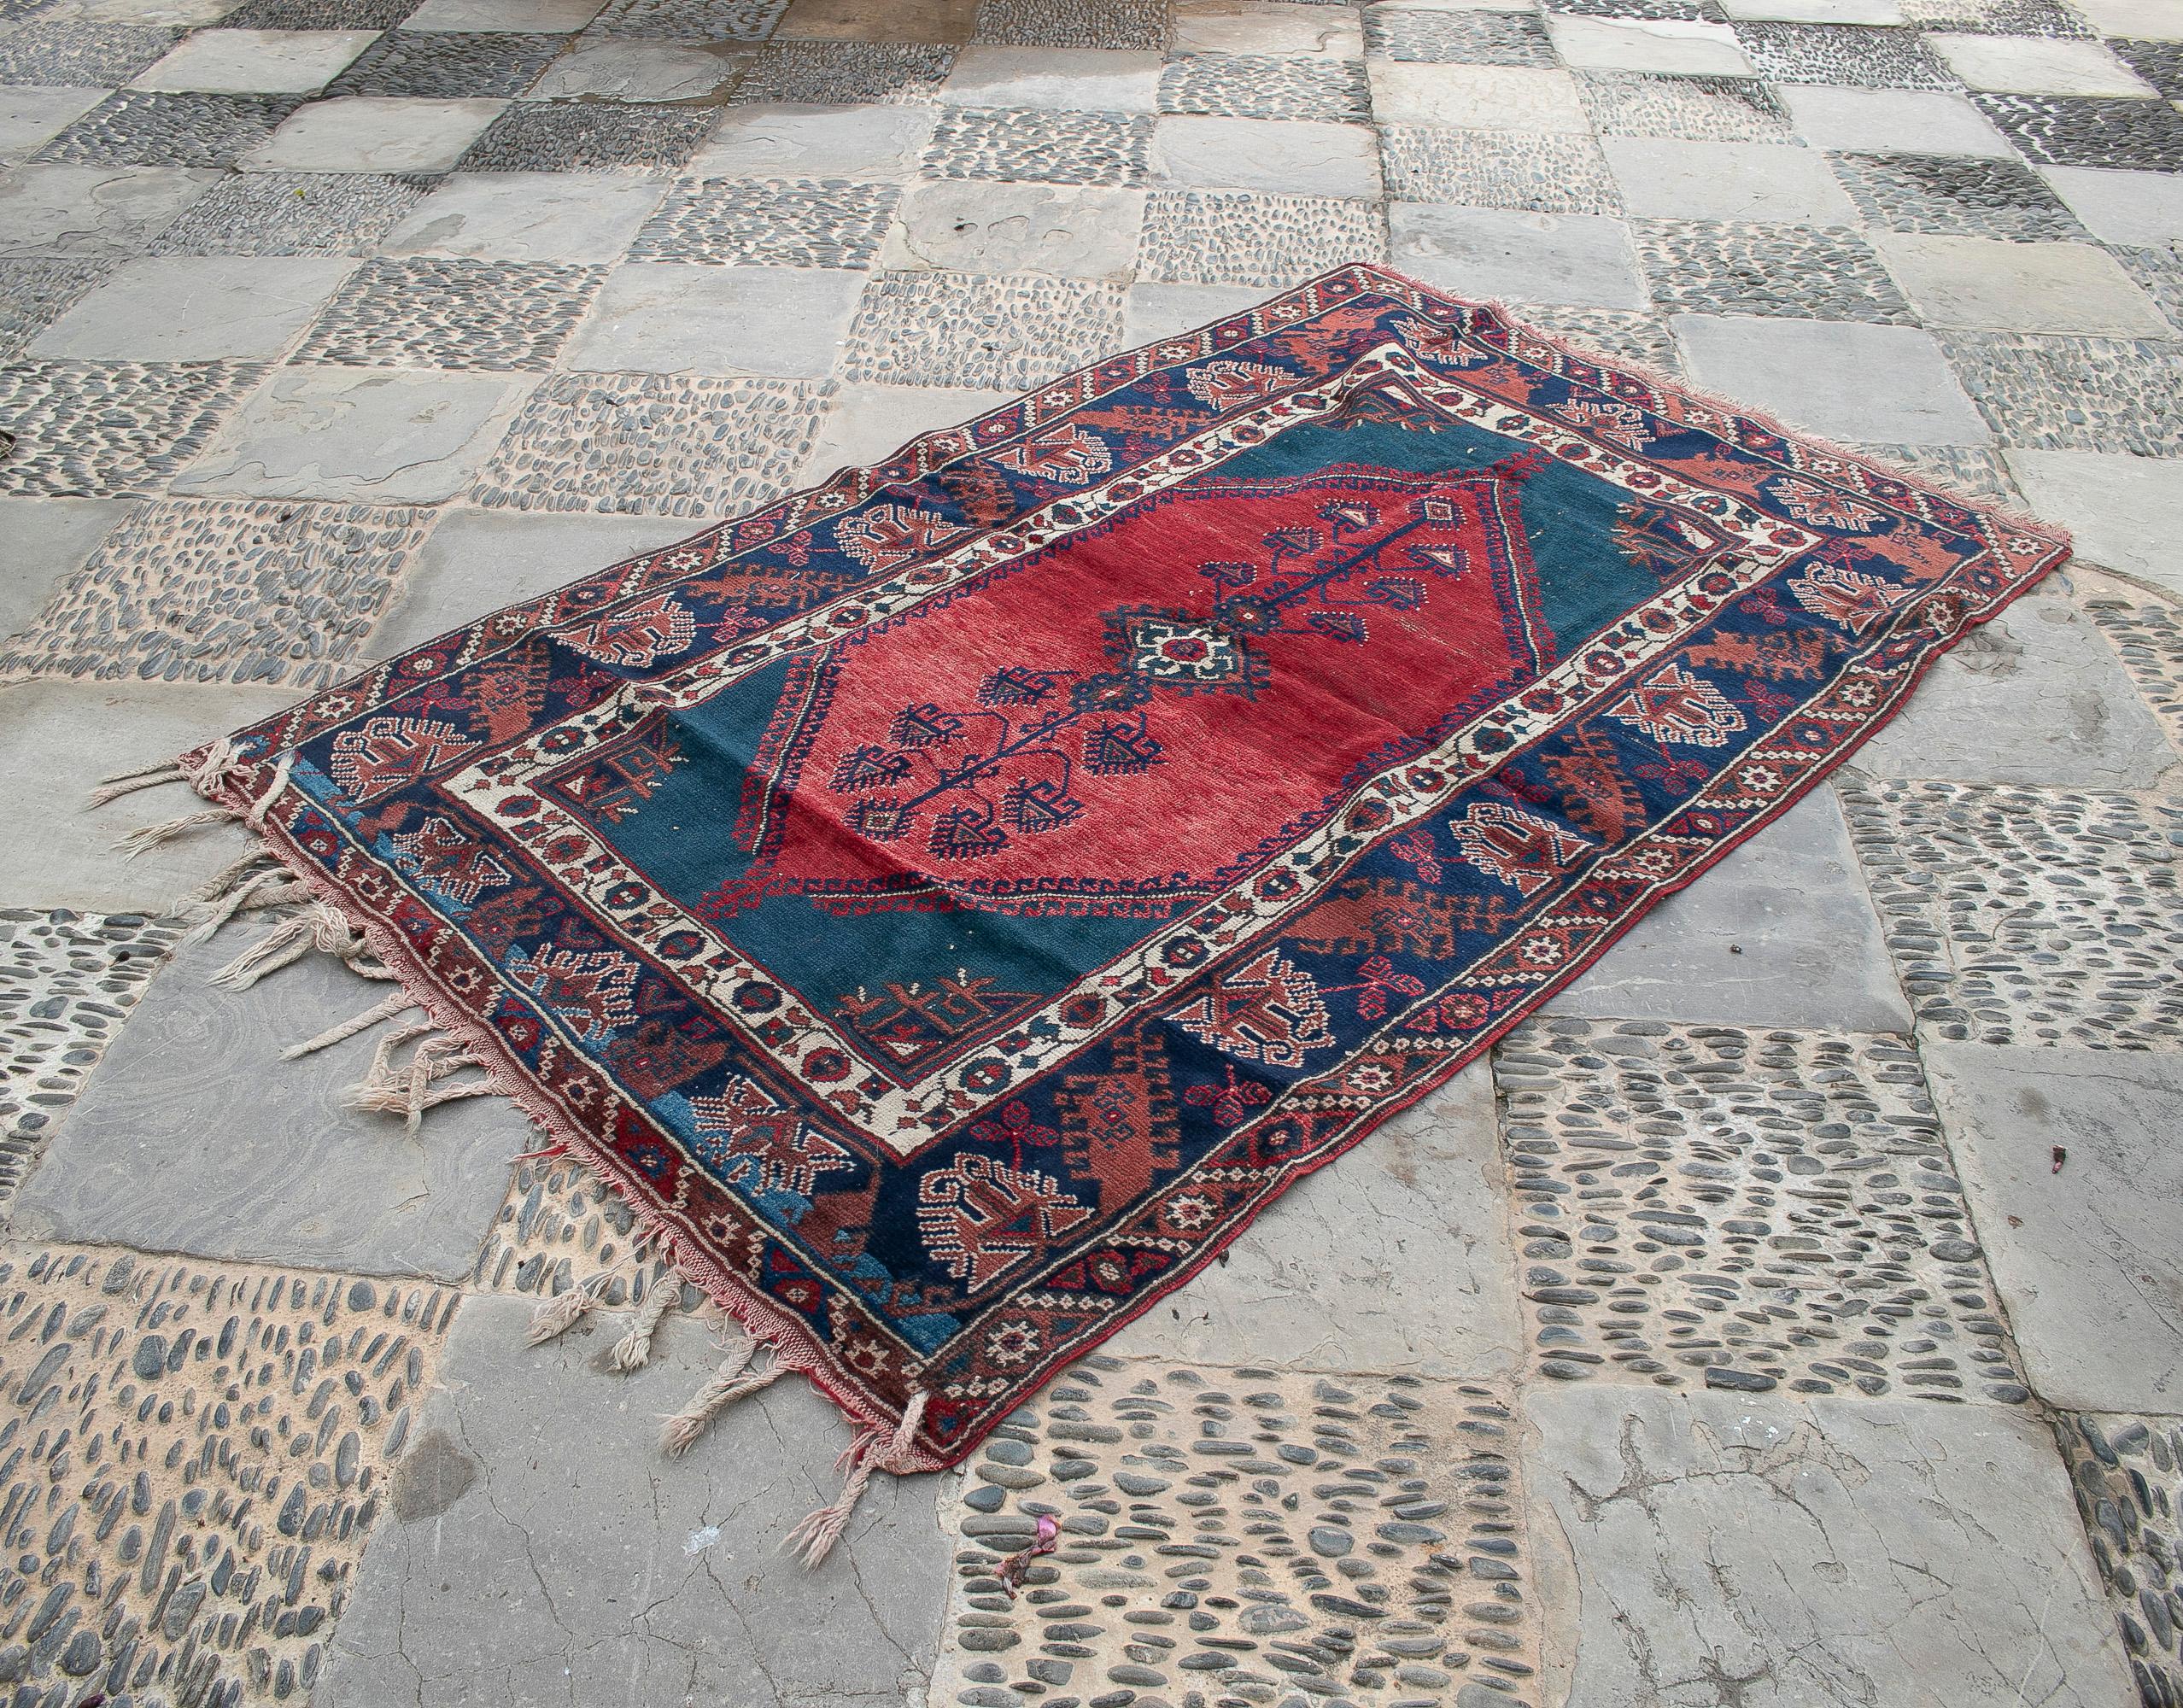 Antique 19th century Turkish Kilim wool carpet rug.